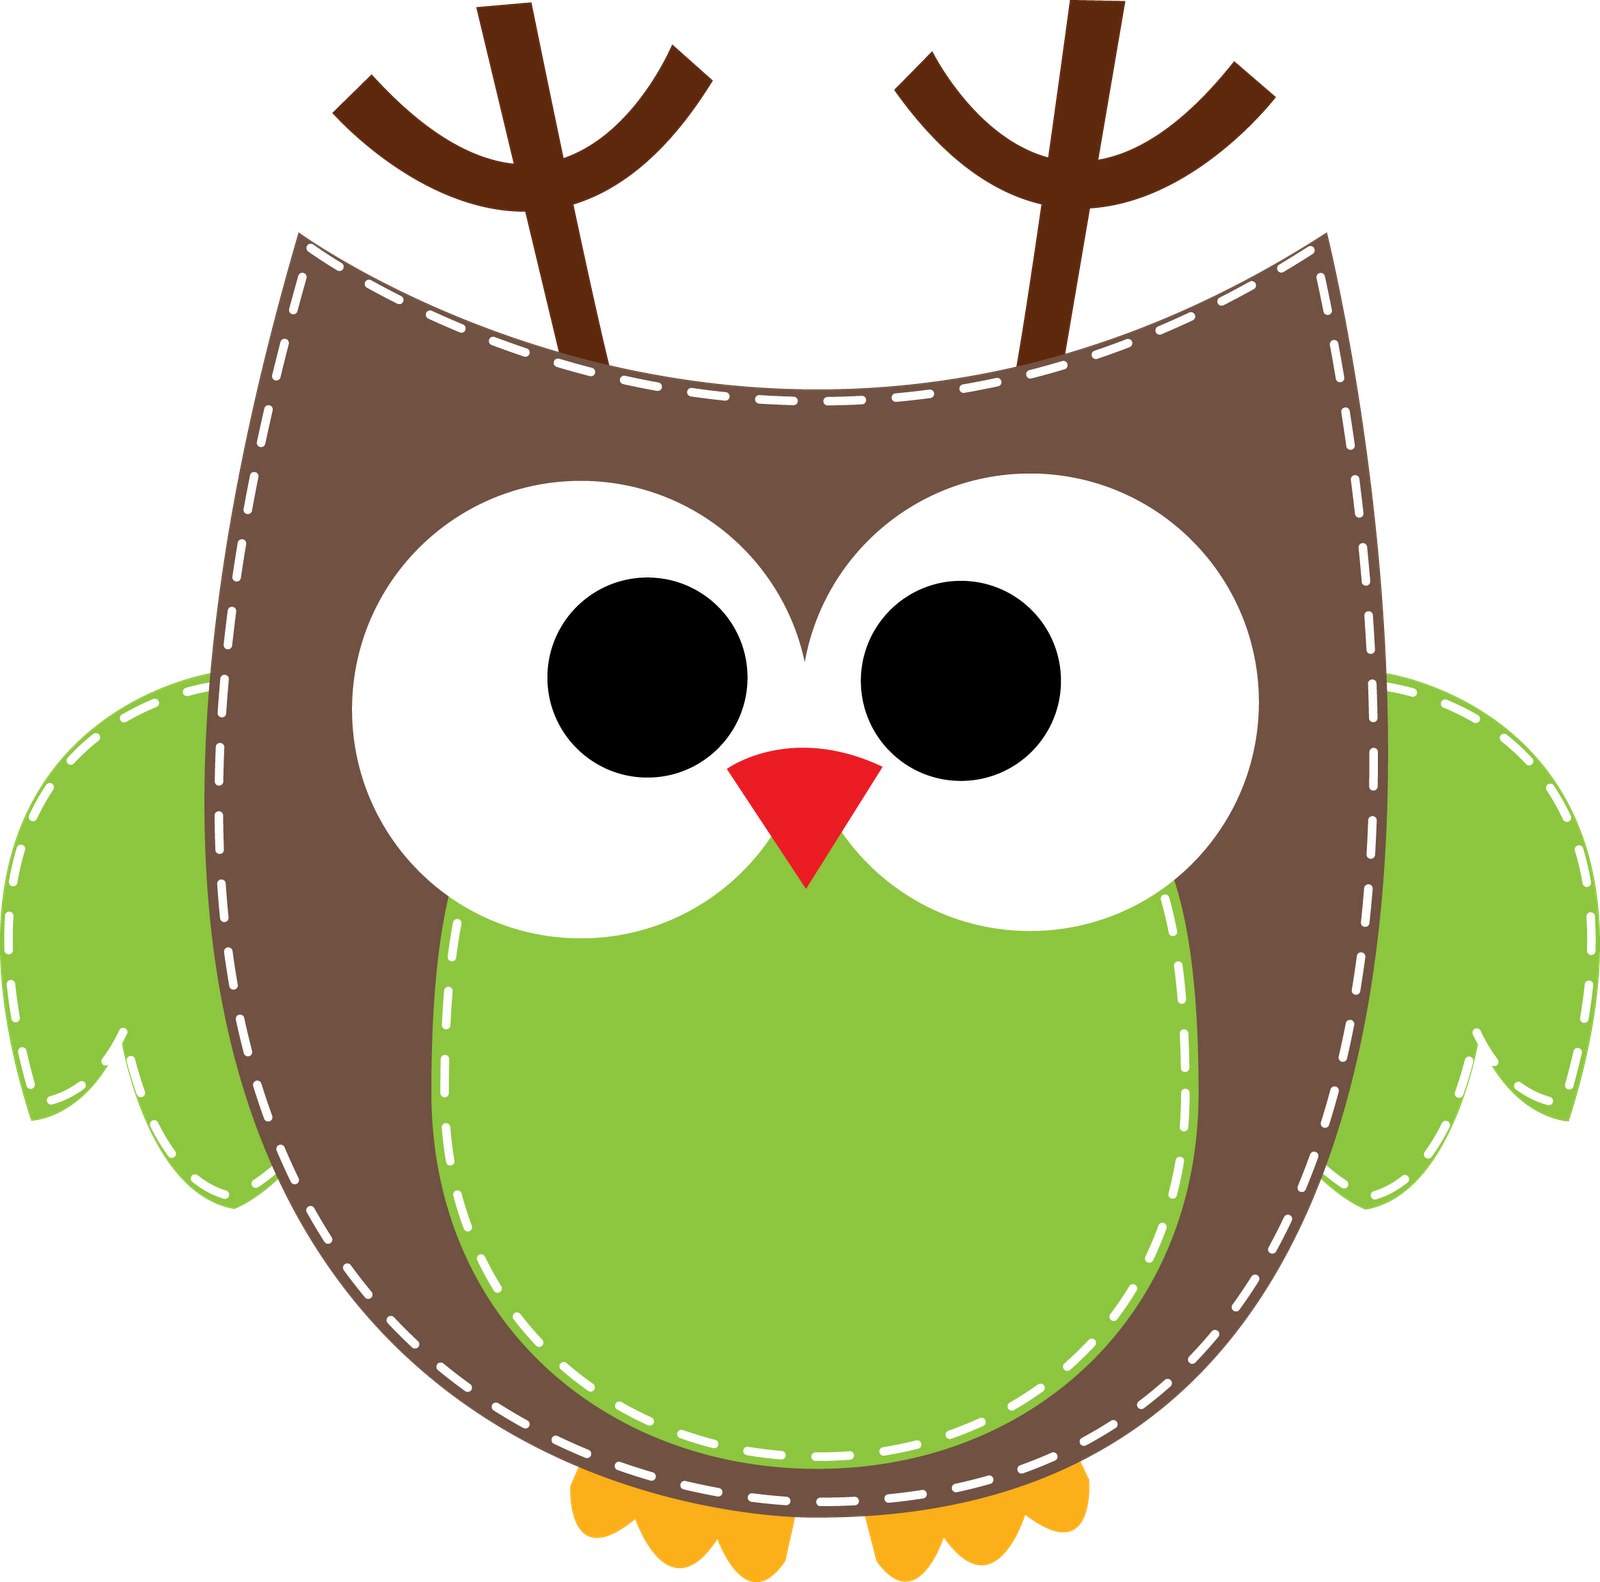 Owl clipart for kids